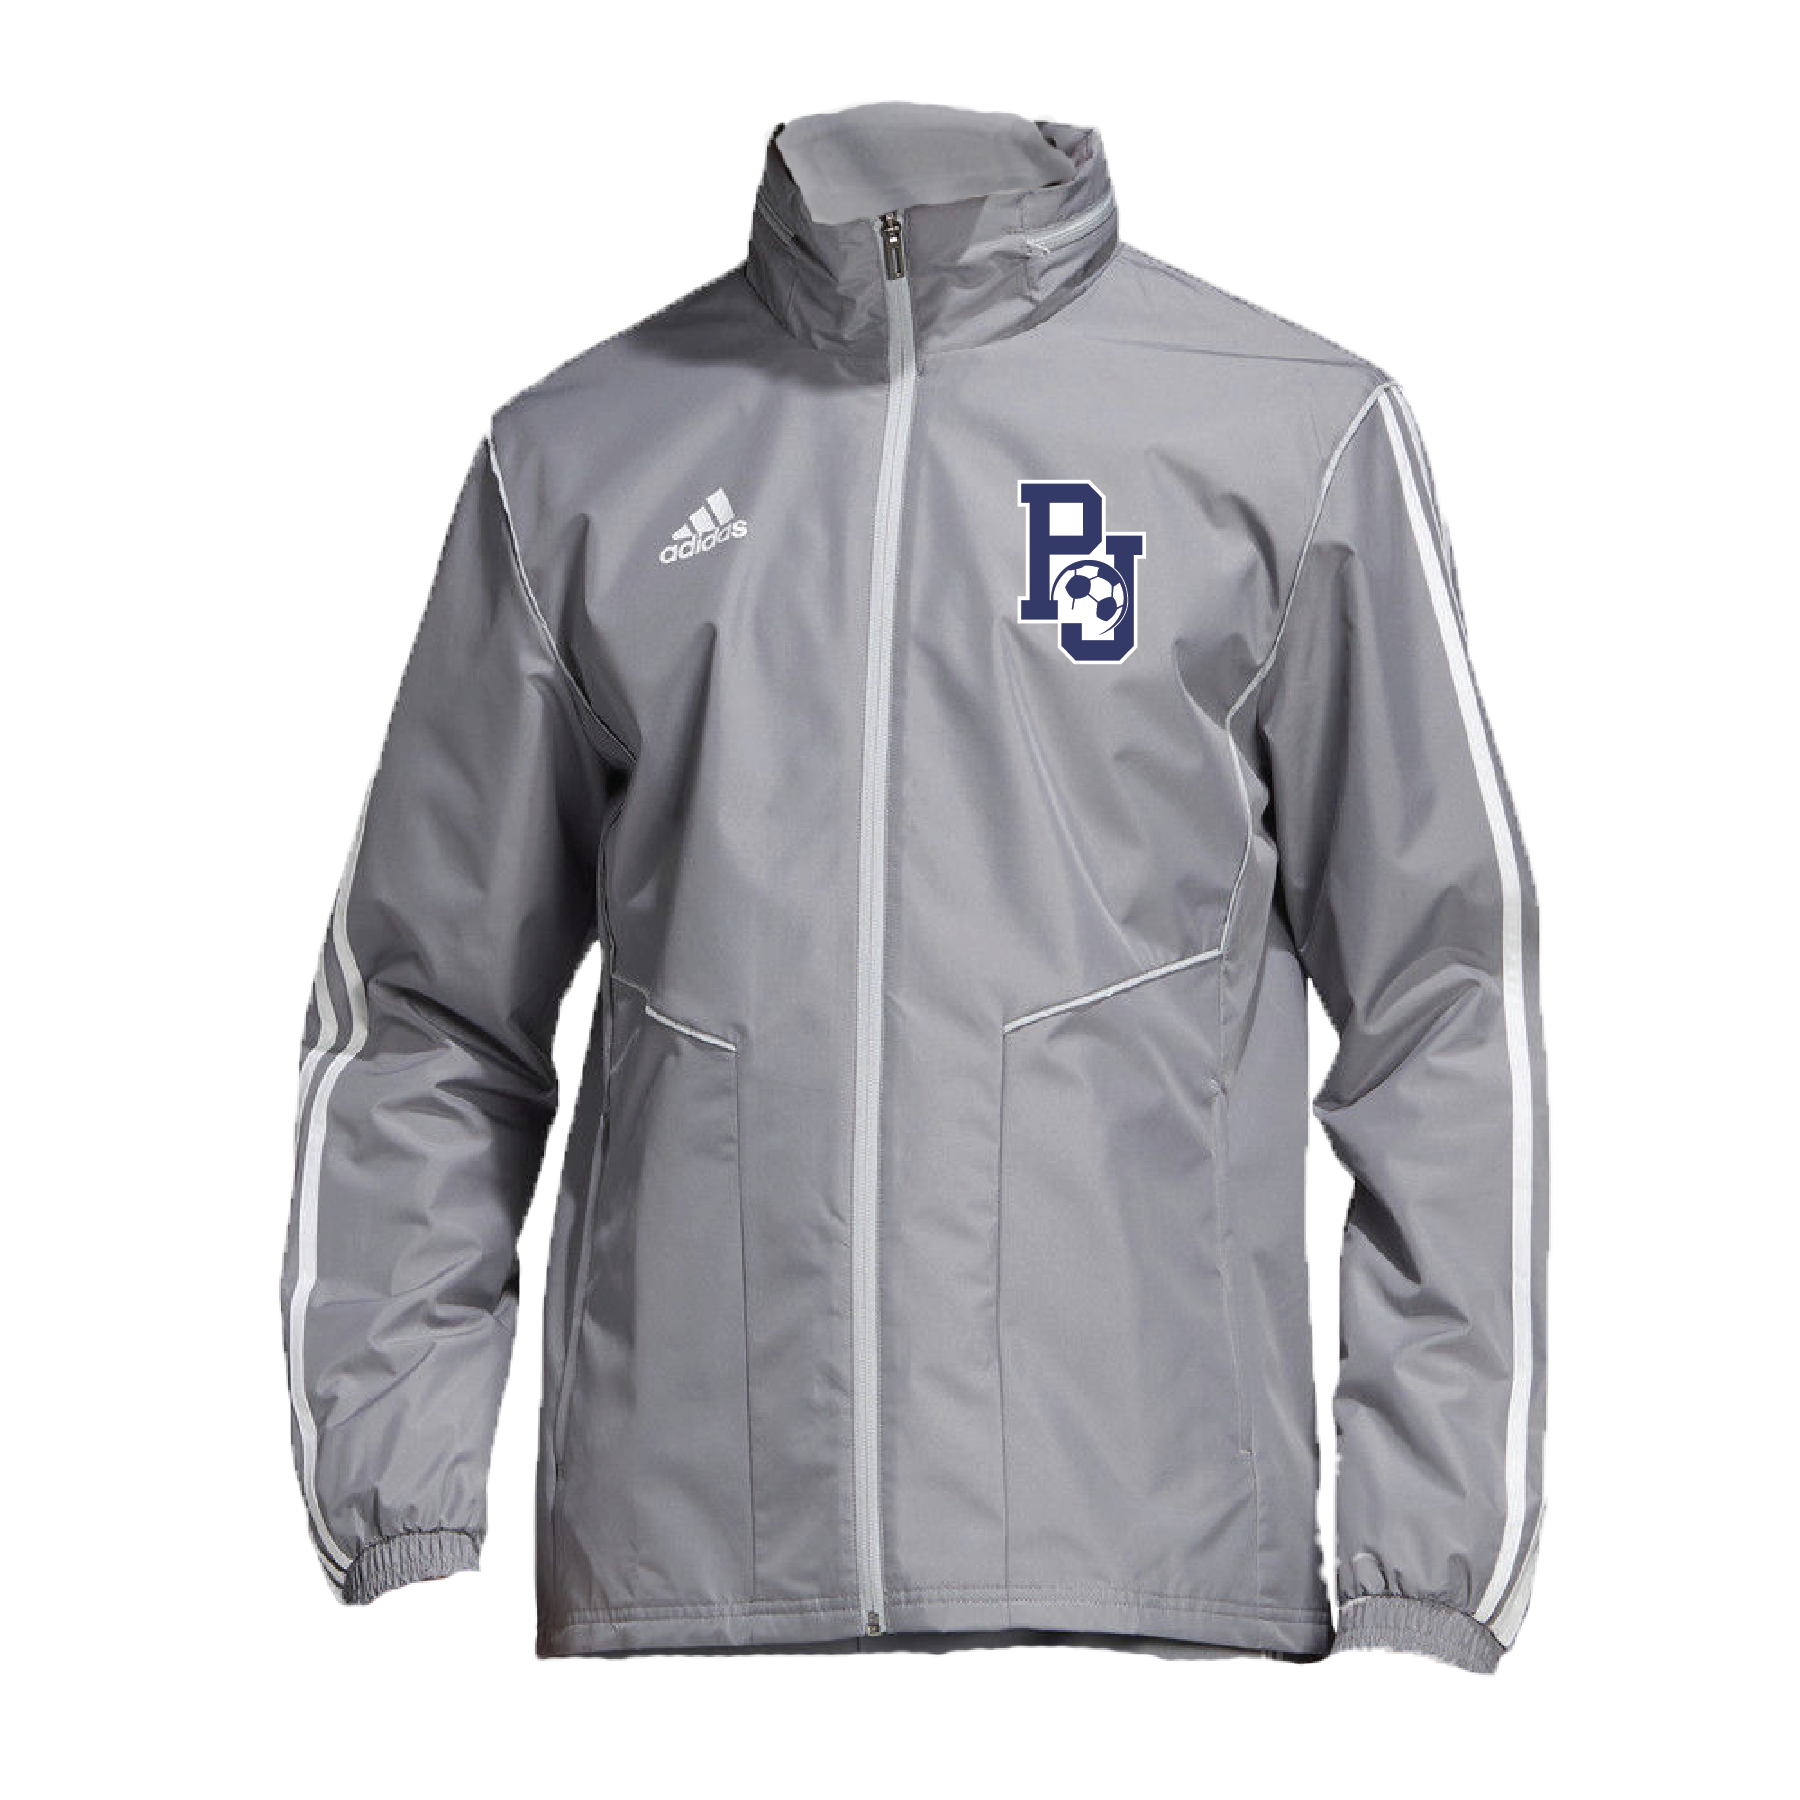 adidas rain jacket soccer